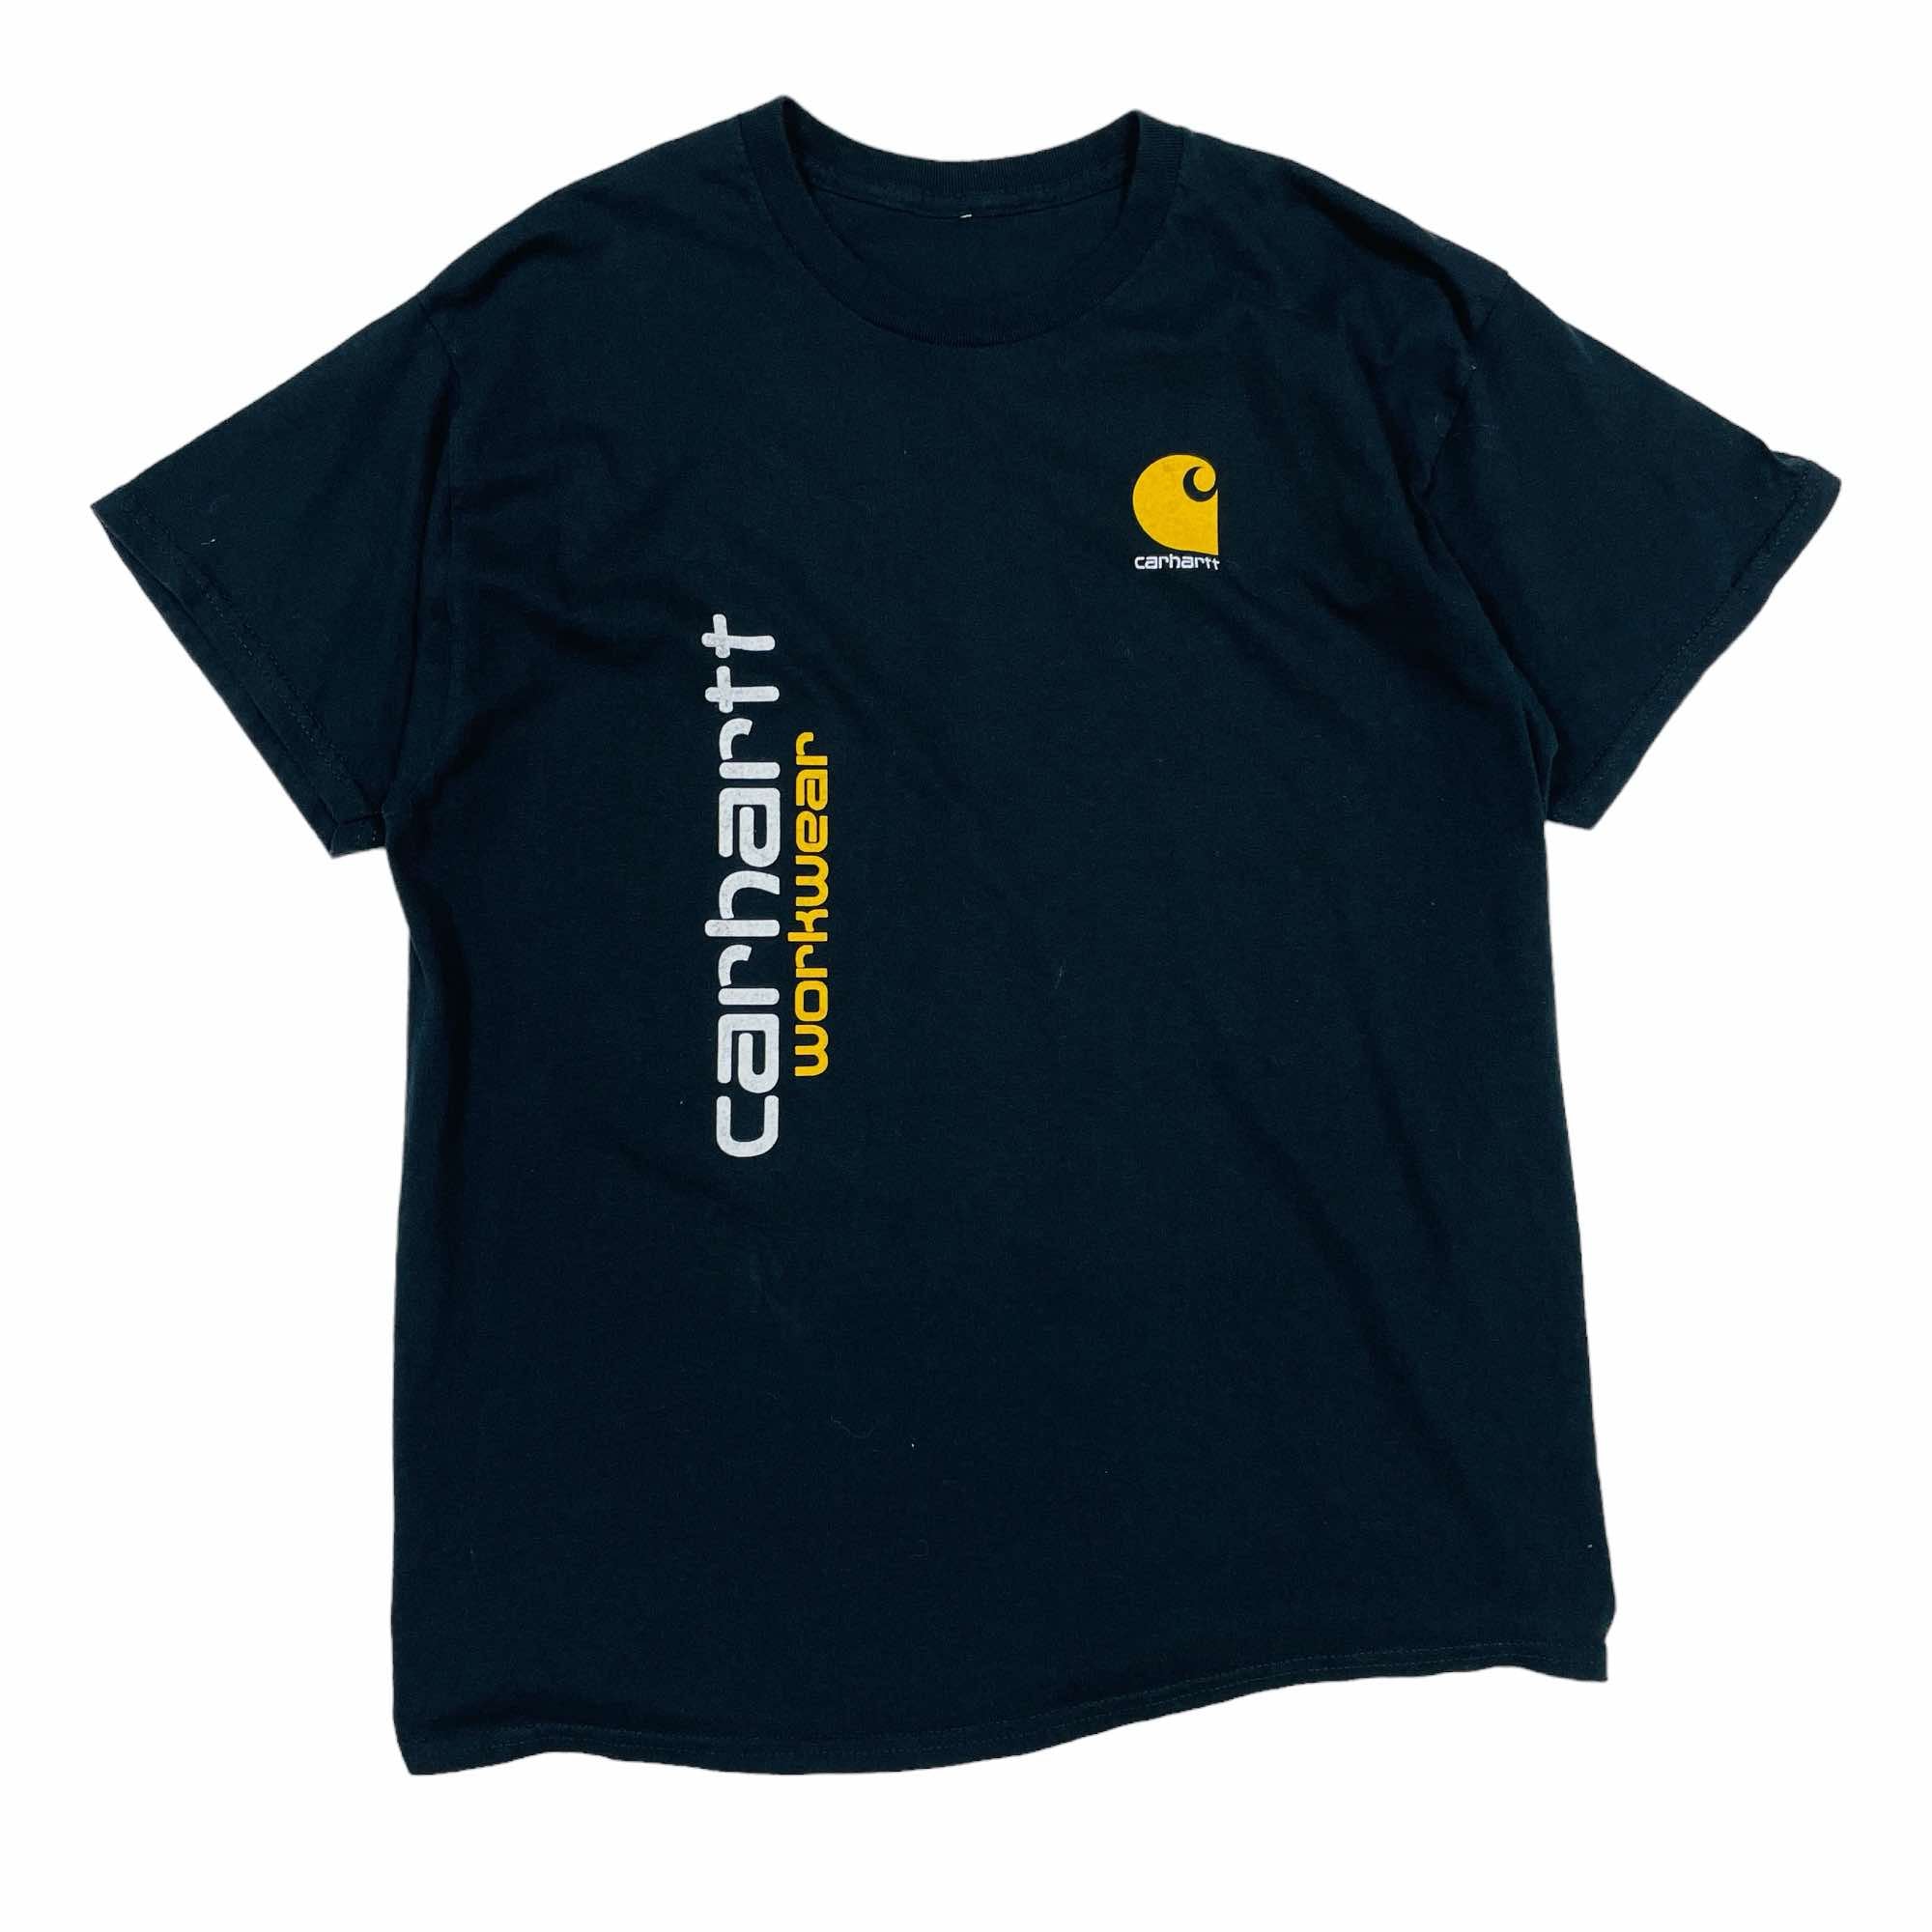 Carhartt USA T-Shirt - Medium